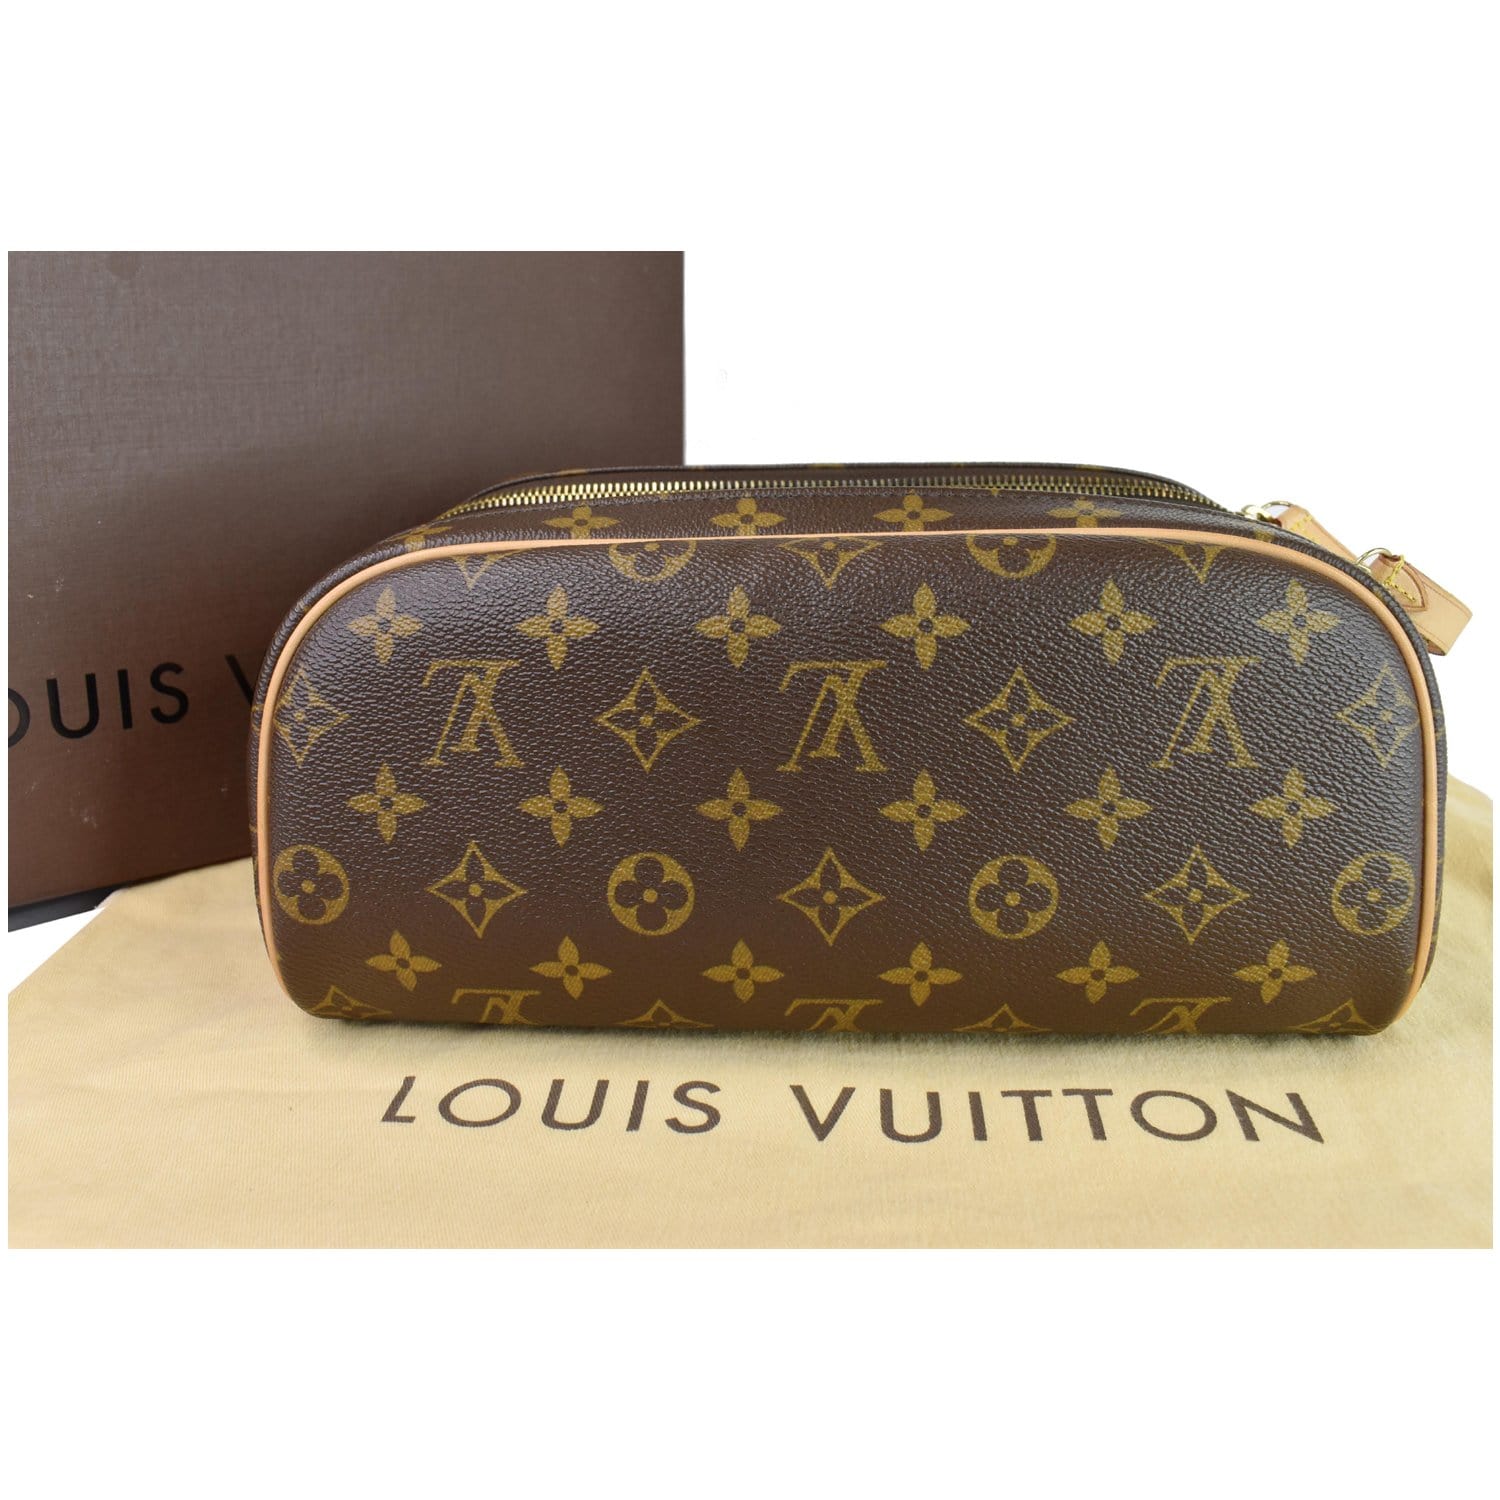 Louis Vuitton Big Logo In Signature Brown Monogram Background Bedding Set  Queen Size - Mugteeco